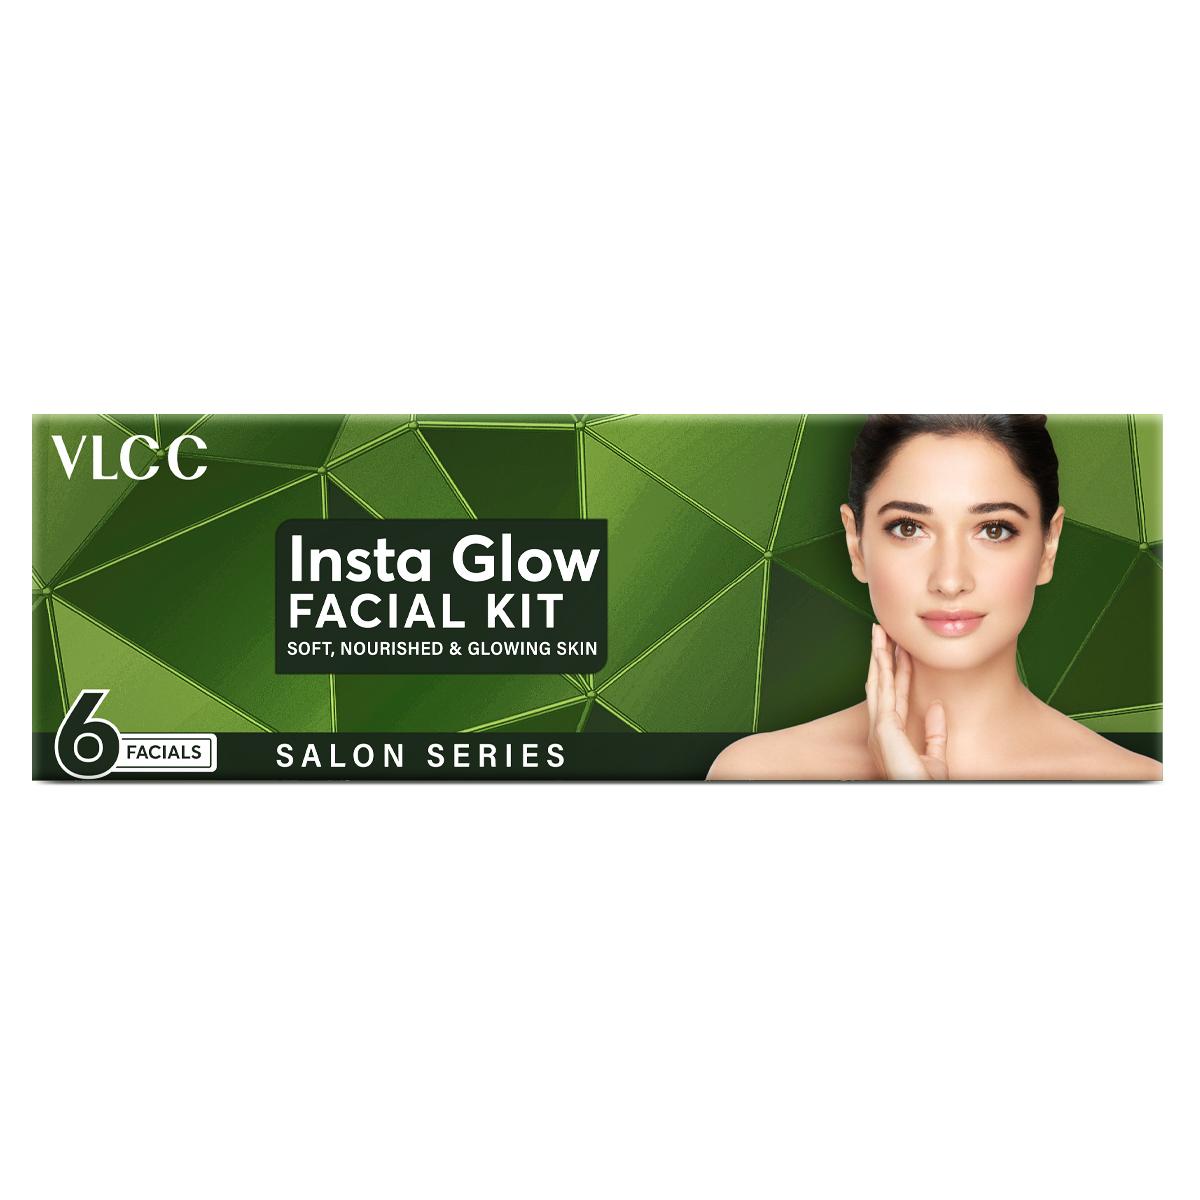 VLCC Salon Series Insta Glow Facial Kit - Professional Spa-like Glow at Home